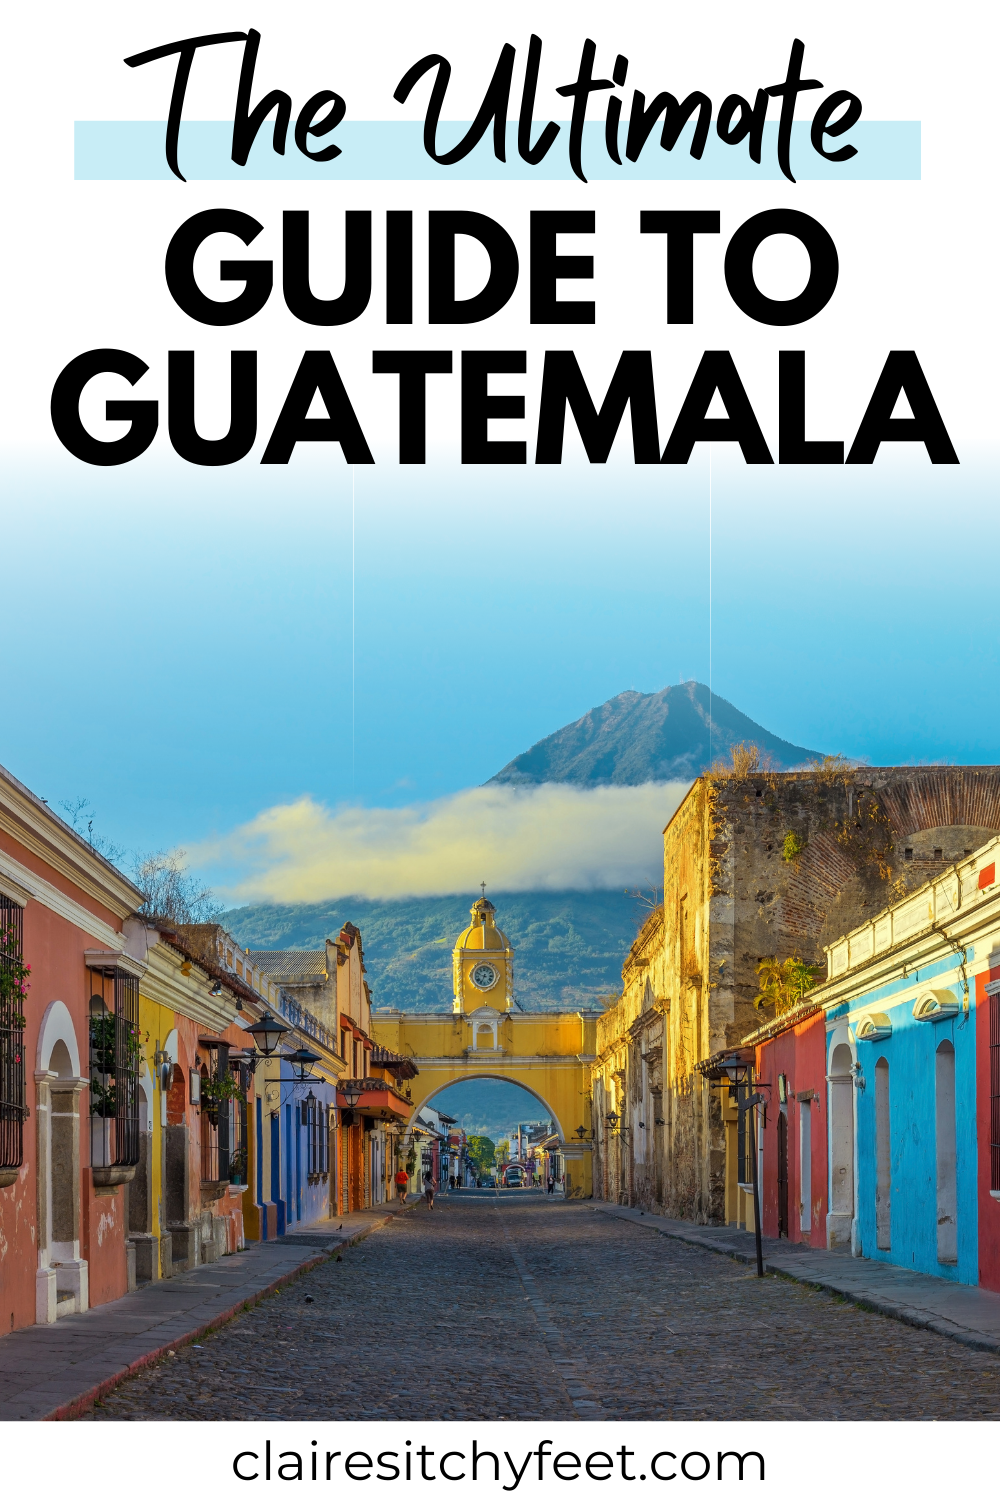 guatemala travel report